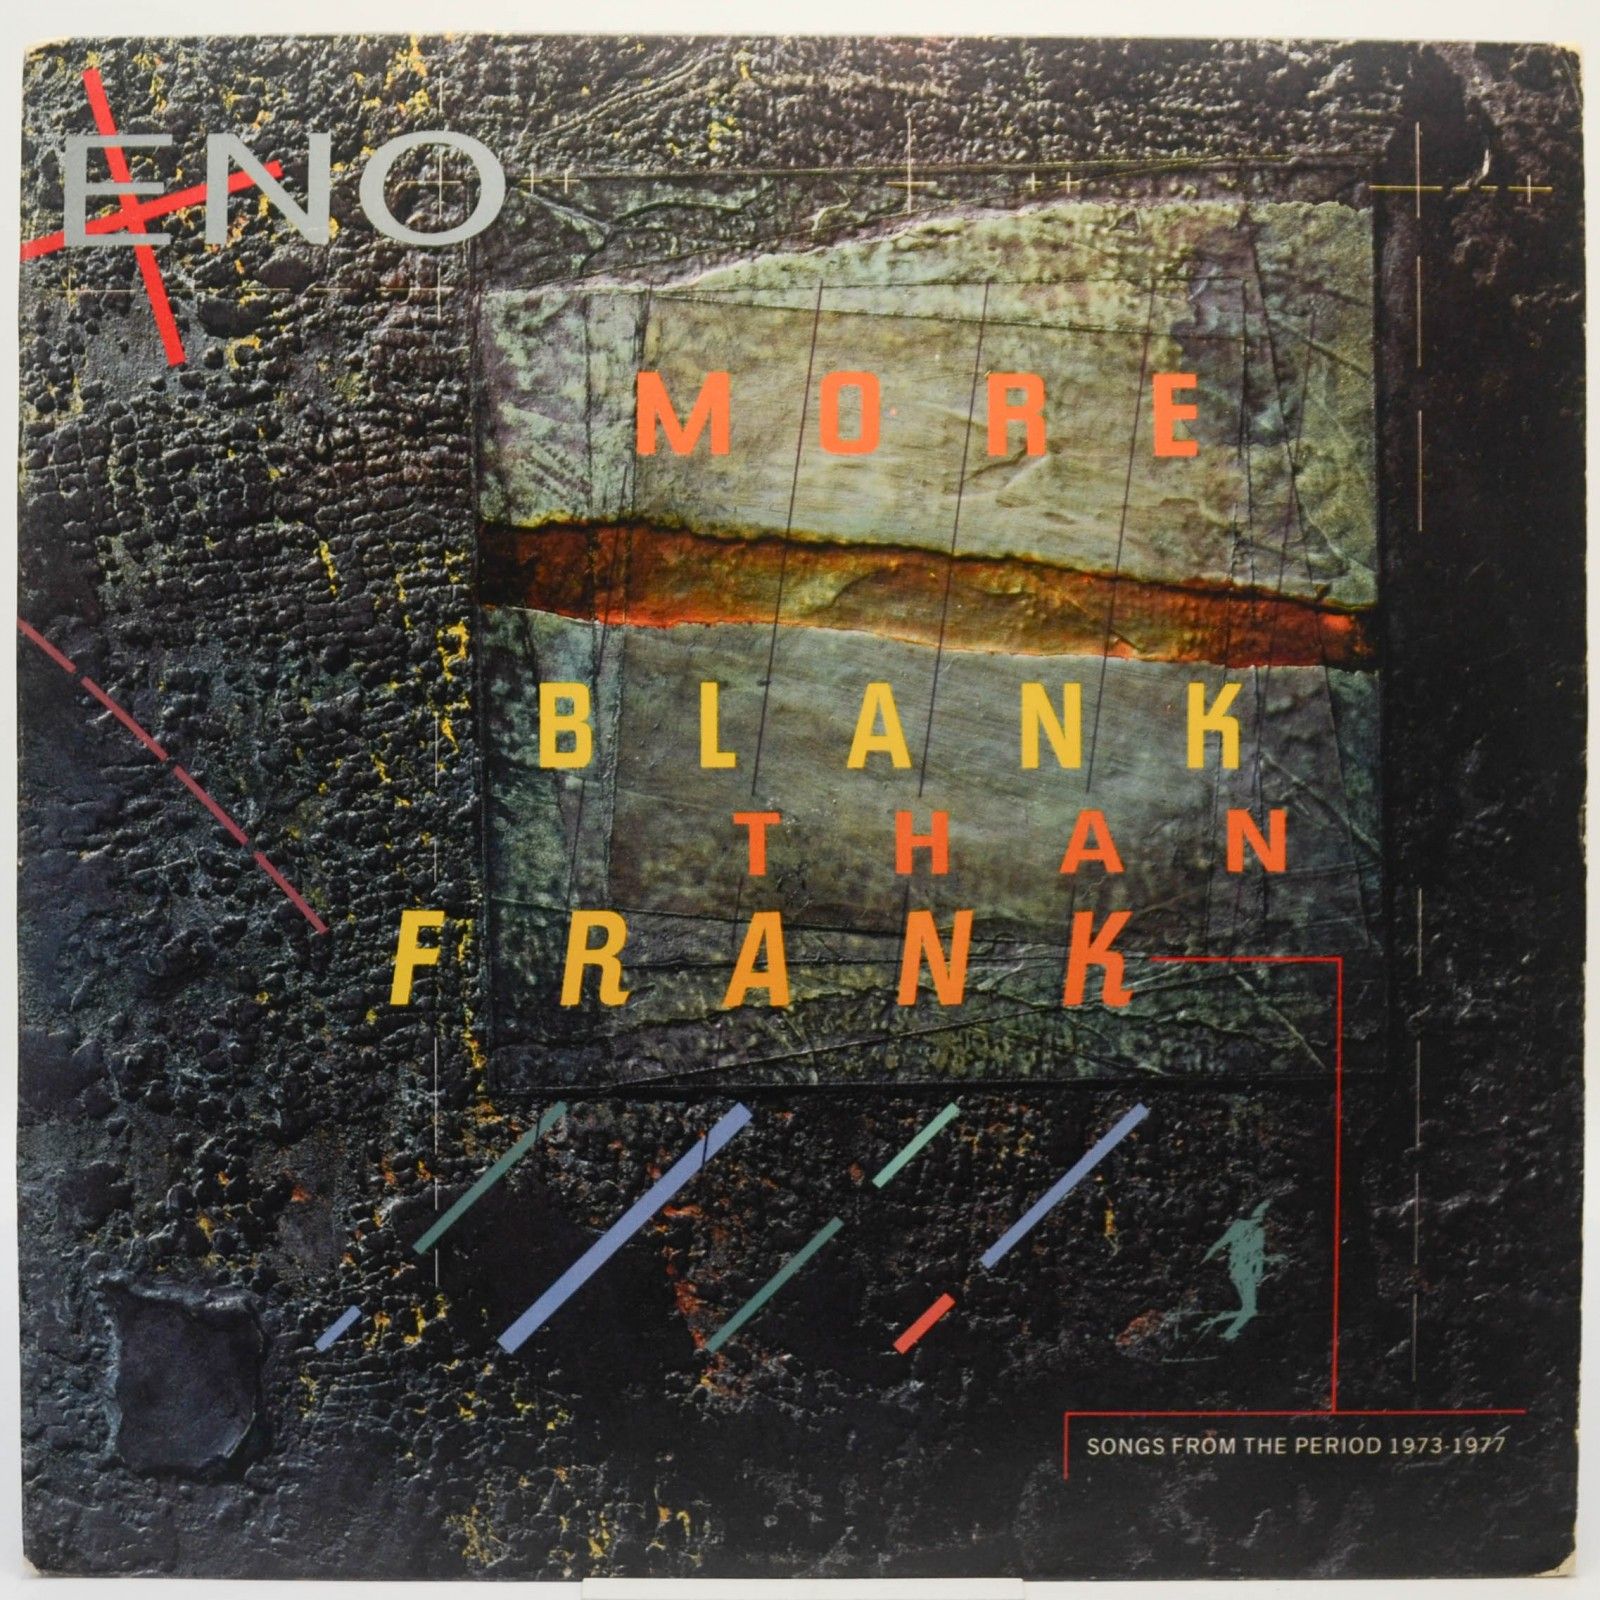 Eno — More Blank Than Frank (USA), 1986